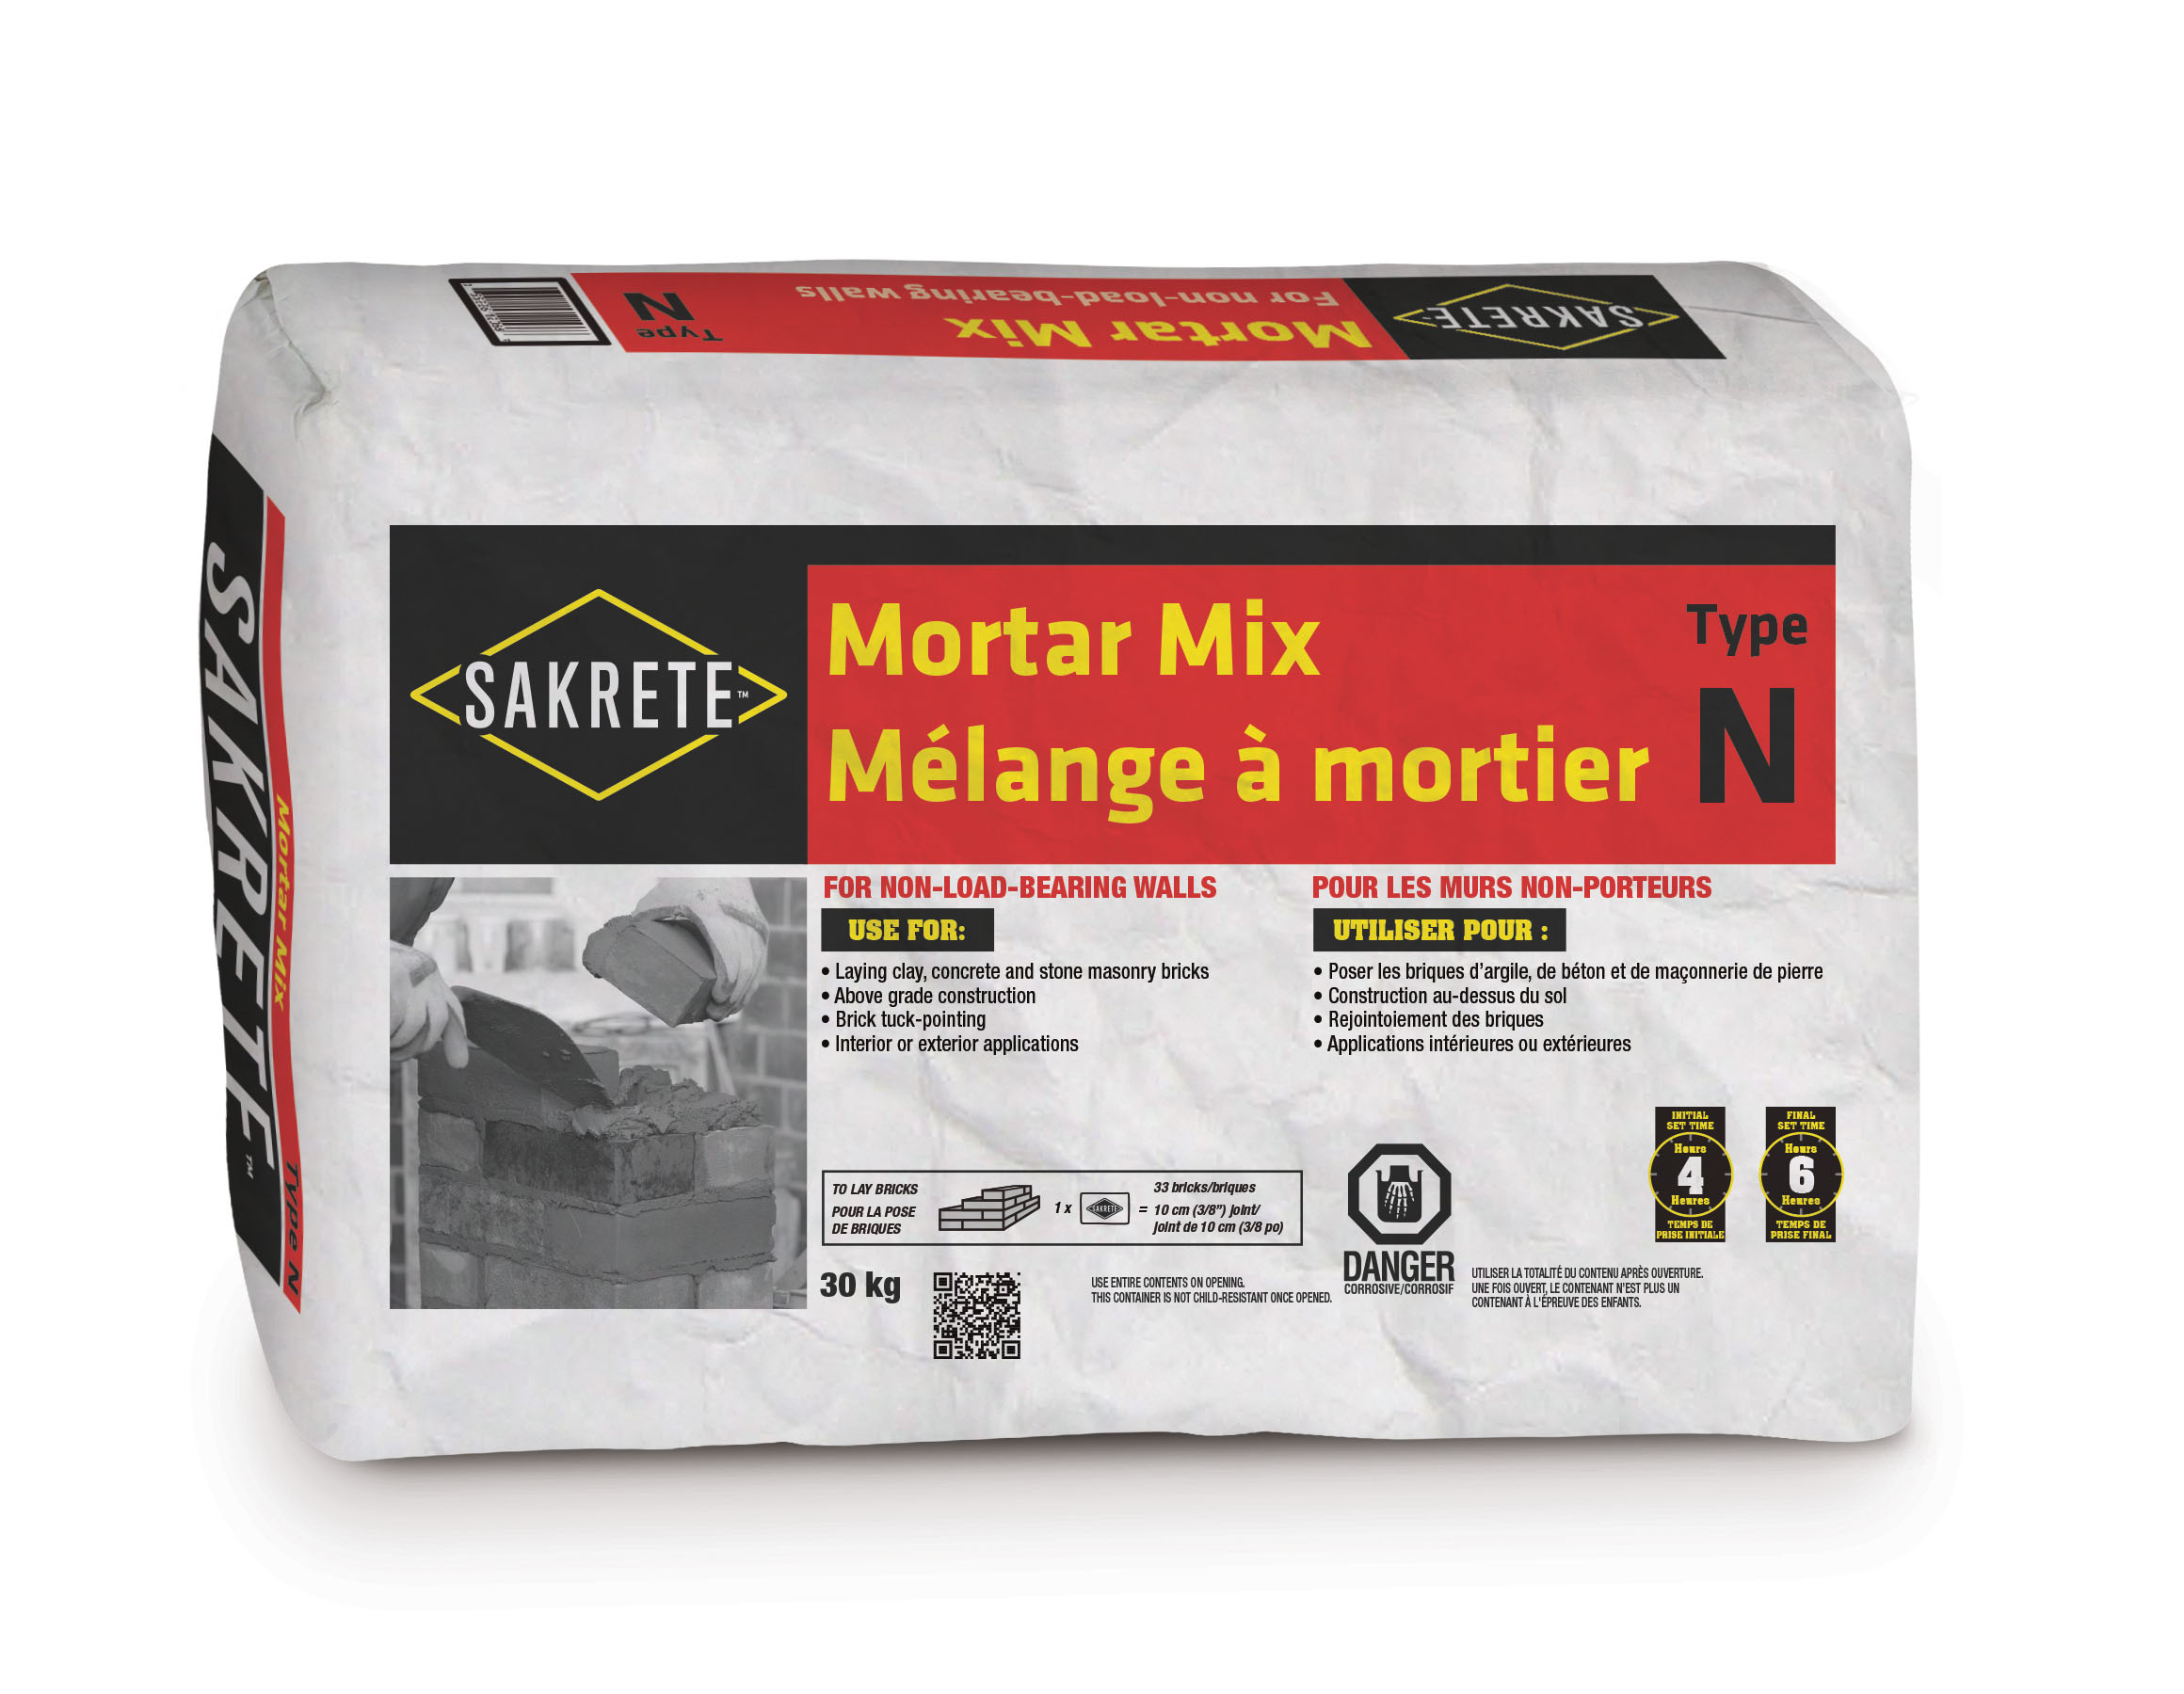 SAKRETE Mortar Mix, Type N > KING Home Improvement Products